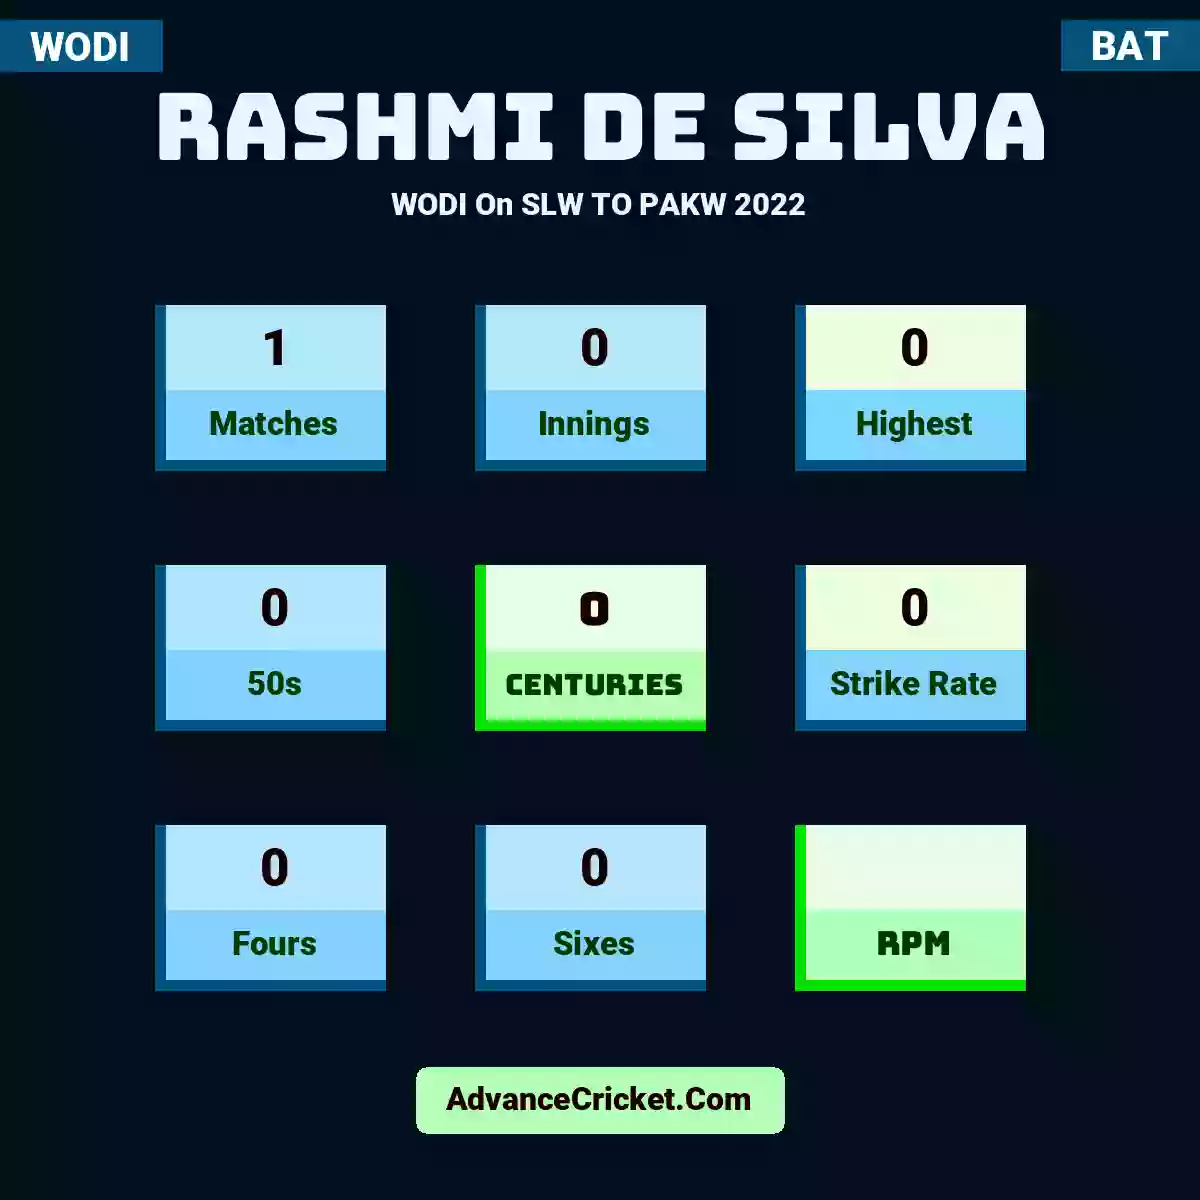 Rashmi De Silva WODI  On SLW TO PAKW 2022, Rashmi De Silva played 1 matches, scored 0 runs as highest, 0 half-centuries, and 0 centuries, with a strike rate of 0. R.Silva hit 0 fours and 0 sixes.